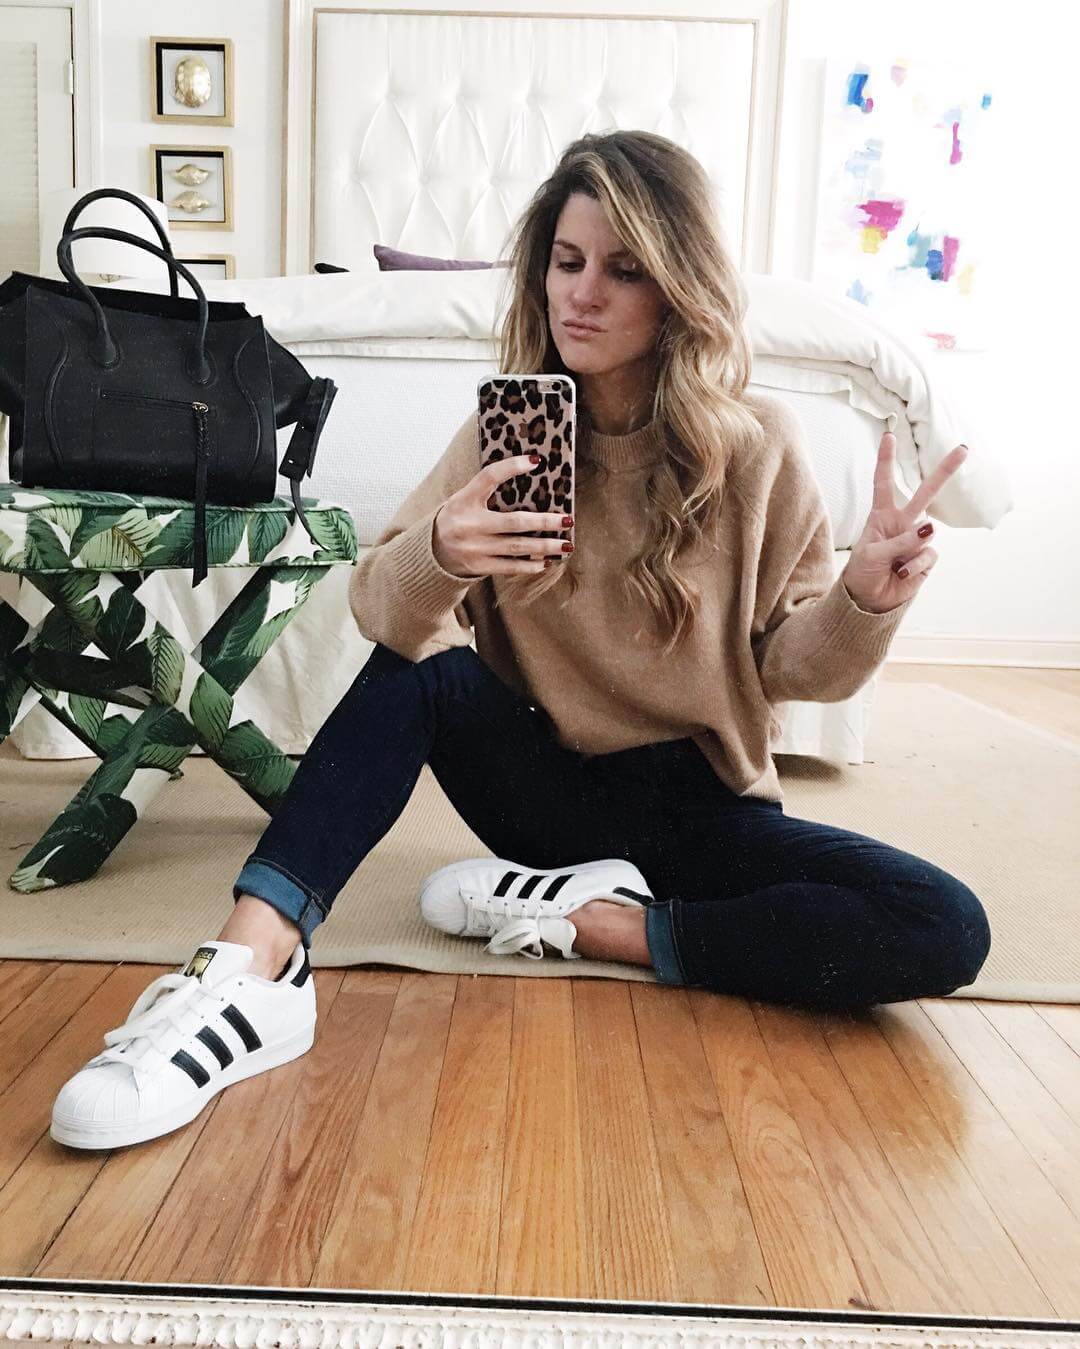 brighton the day mirror selfie adidas, jeans, tan sweater